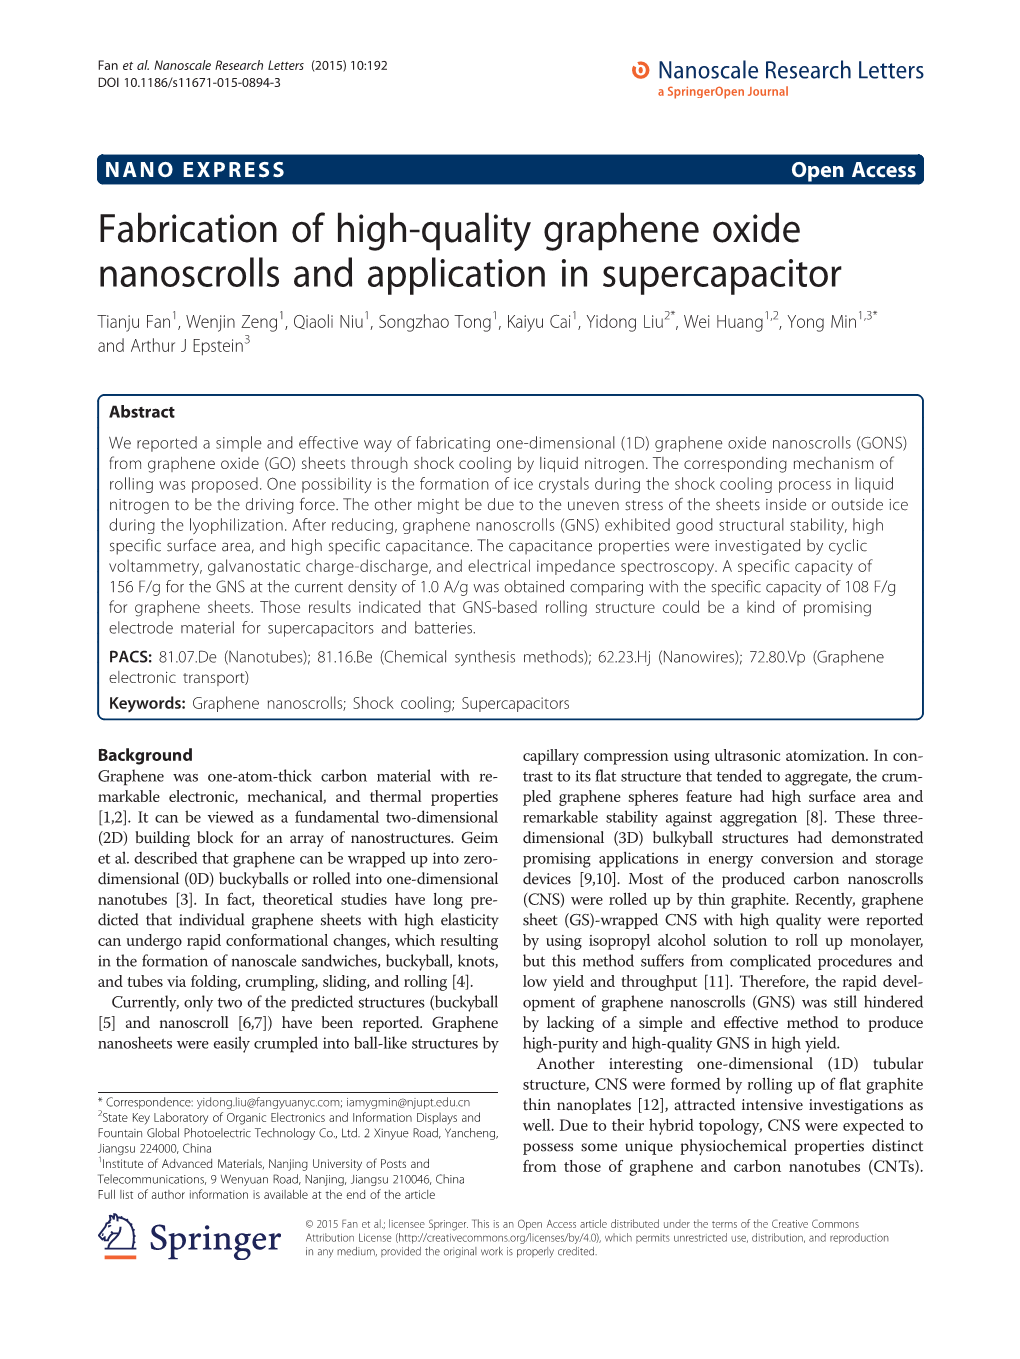 Fabrication of High-Quality Graphene Oxide Nanoscrolls and Application